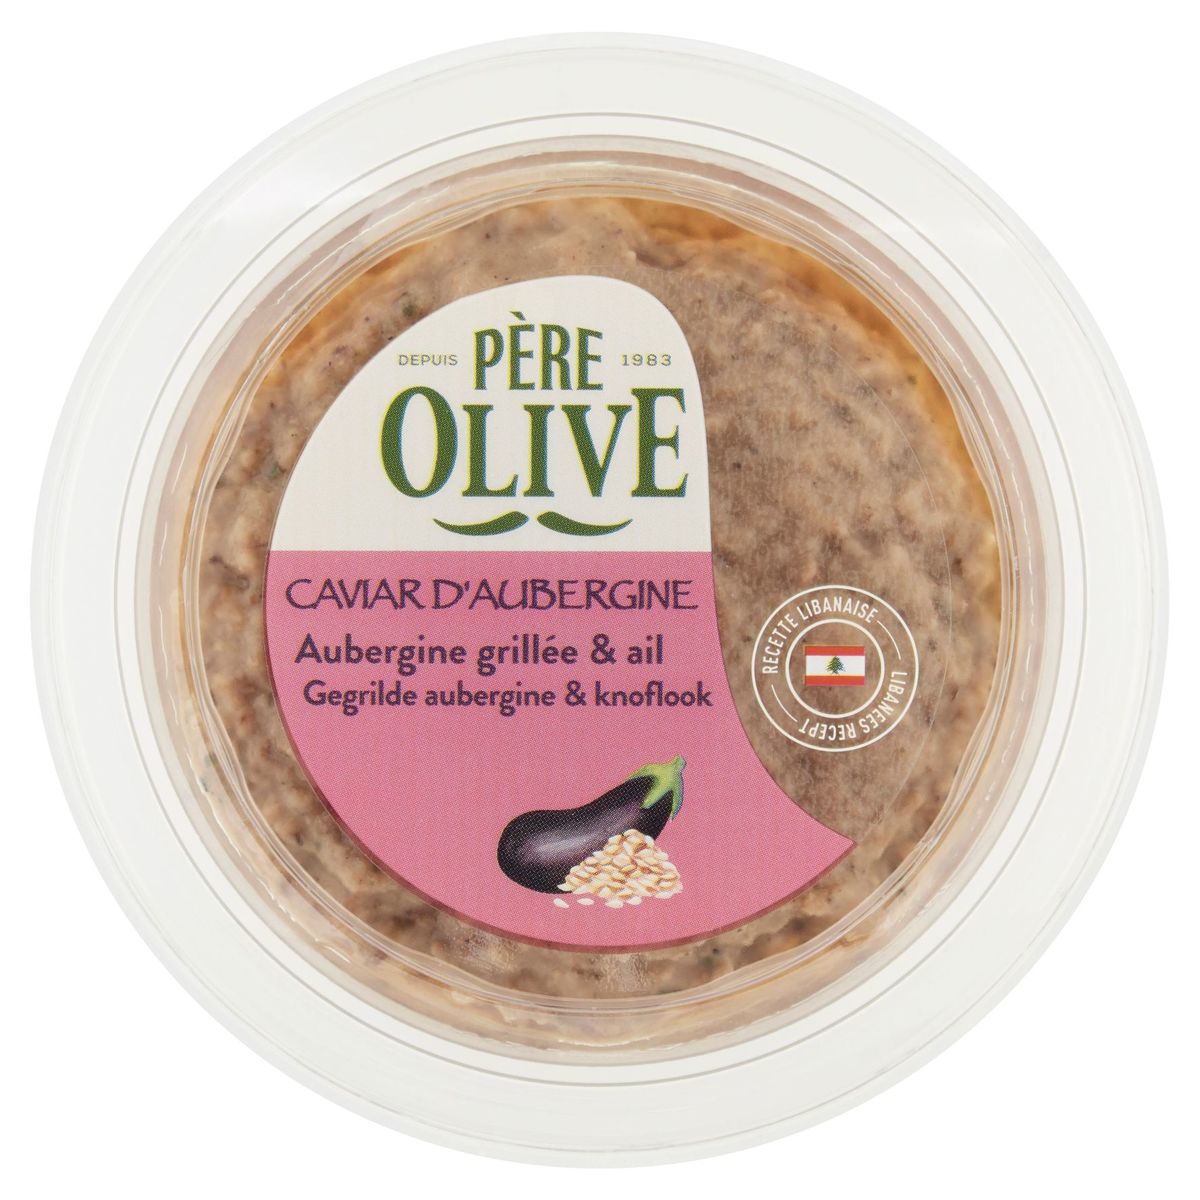 Père Olive Caviar d'Aubergine Grillée & Ail 175 g